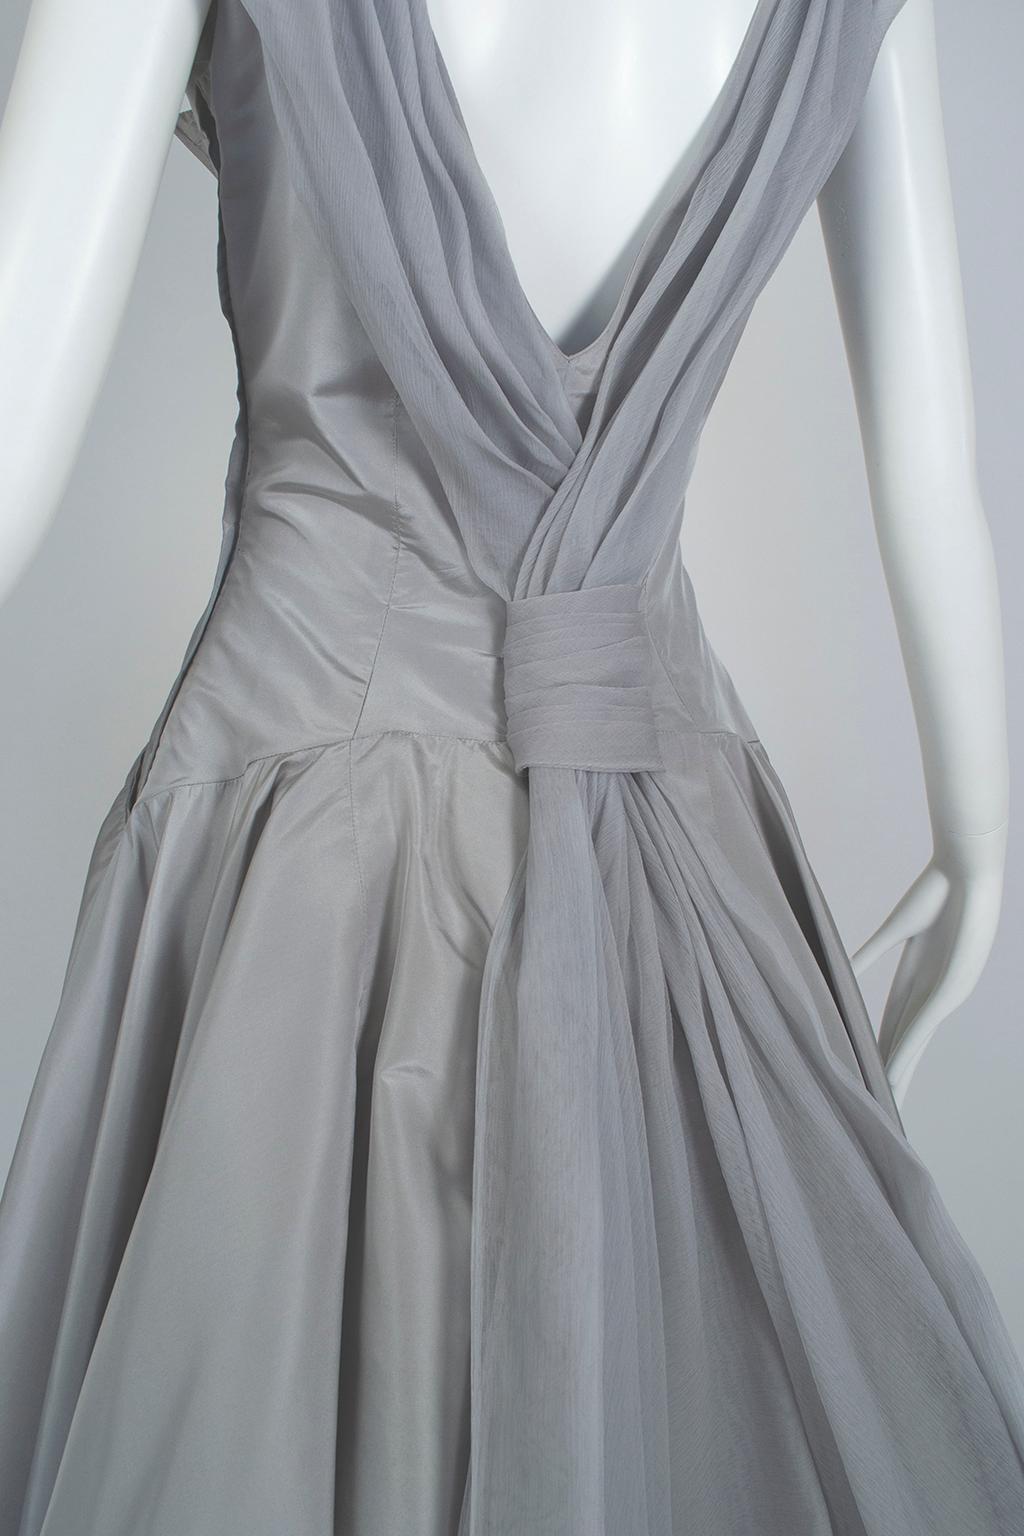 Werlé Beverly Hills Dove Gray Bib-Front Ballerina Dress - Medium, 1950s For Sale 3